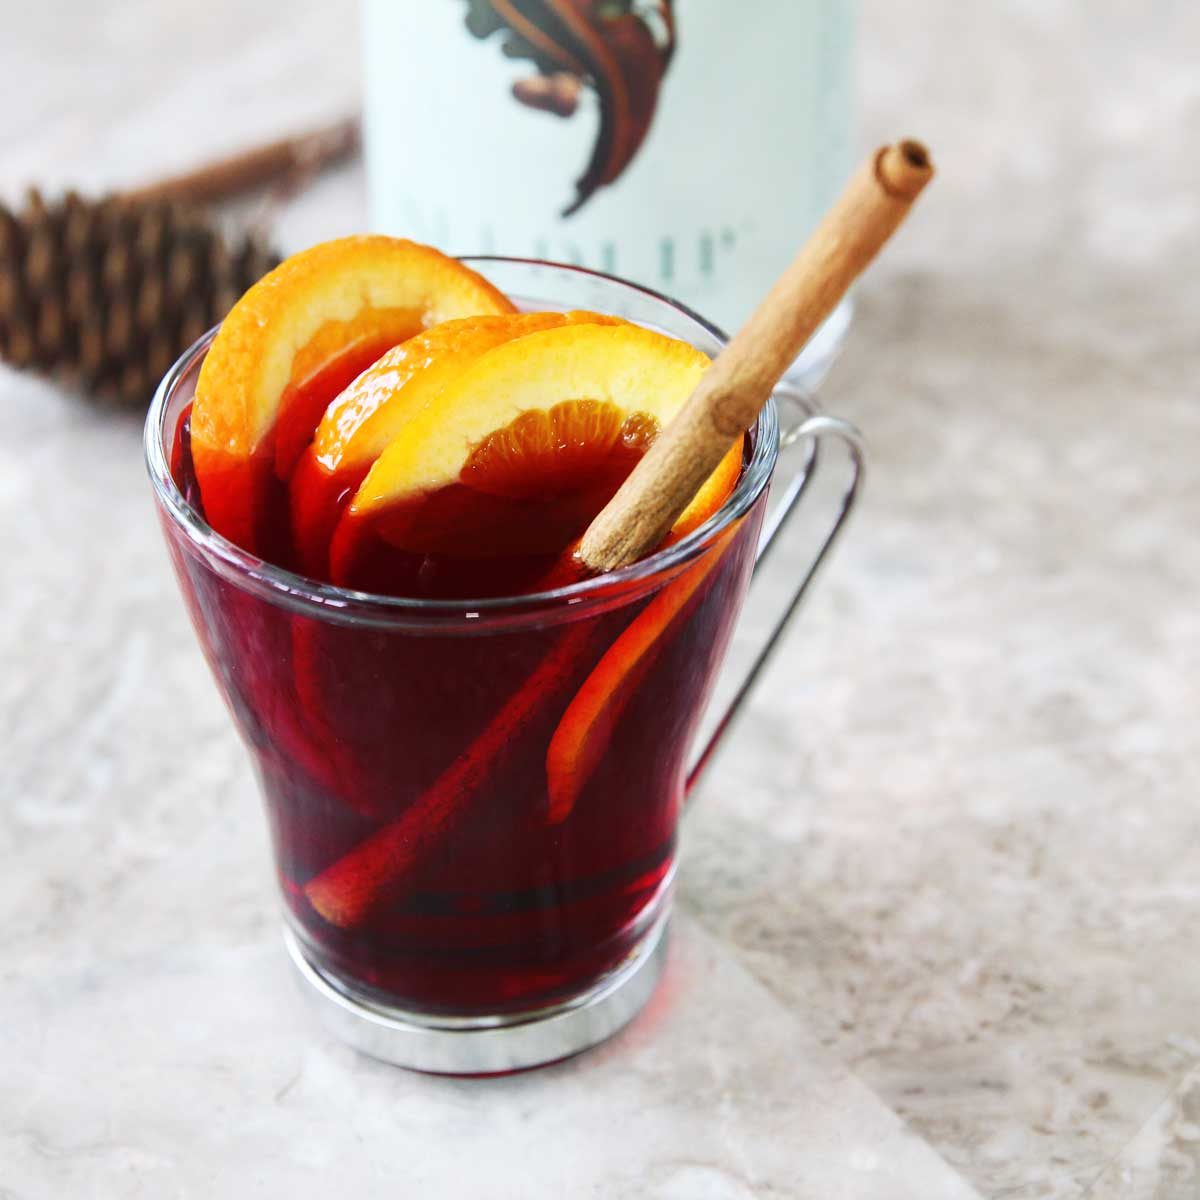 Non-Alcoholic Orange Spiced “Wine” Using Seedlip Grove 42 - Non-Alcoholic spiced wine